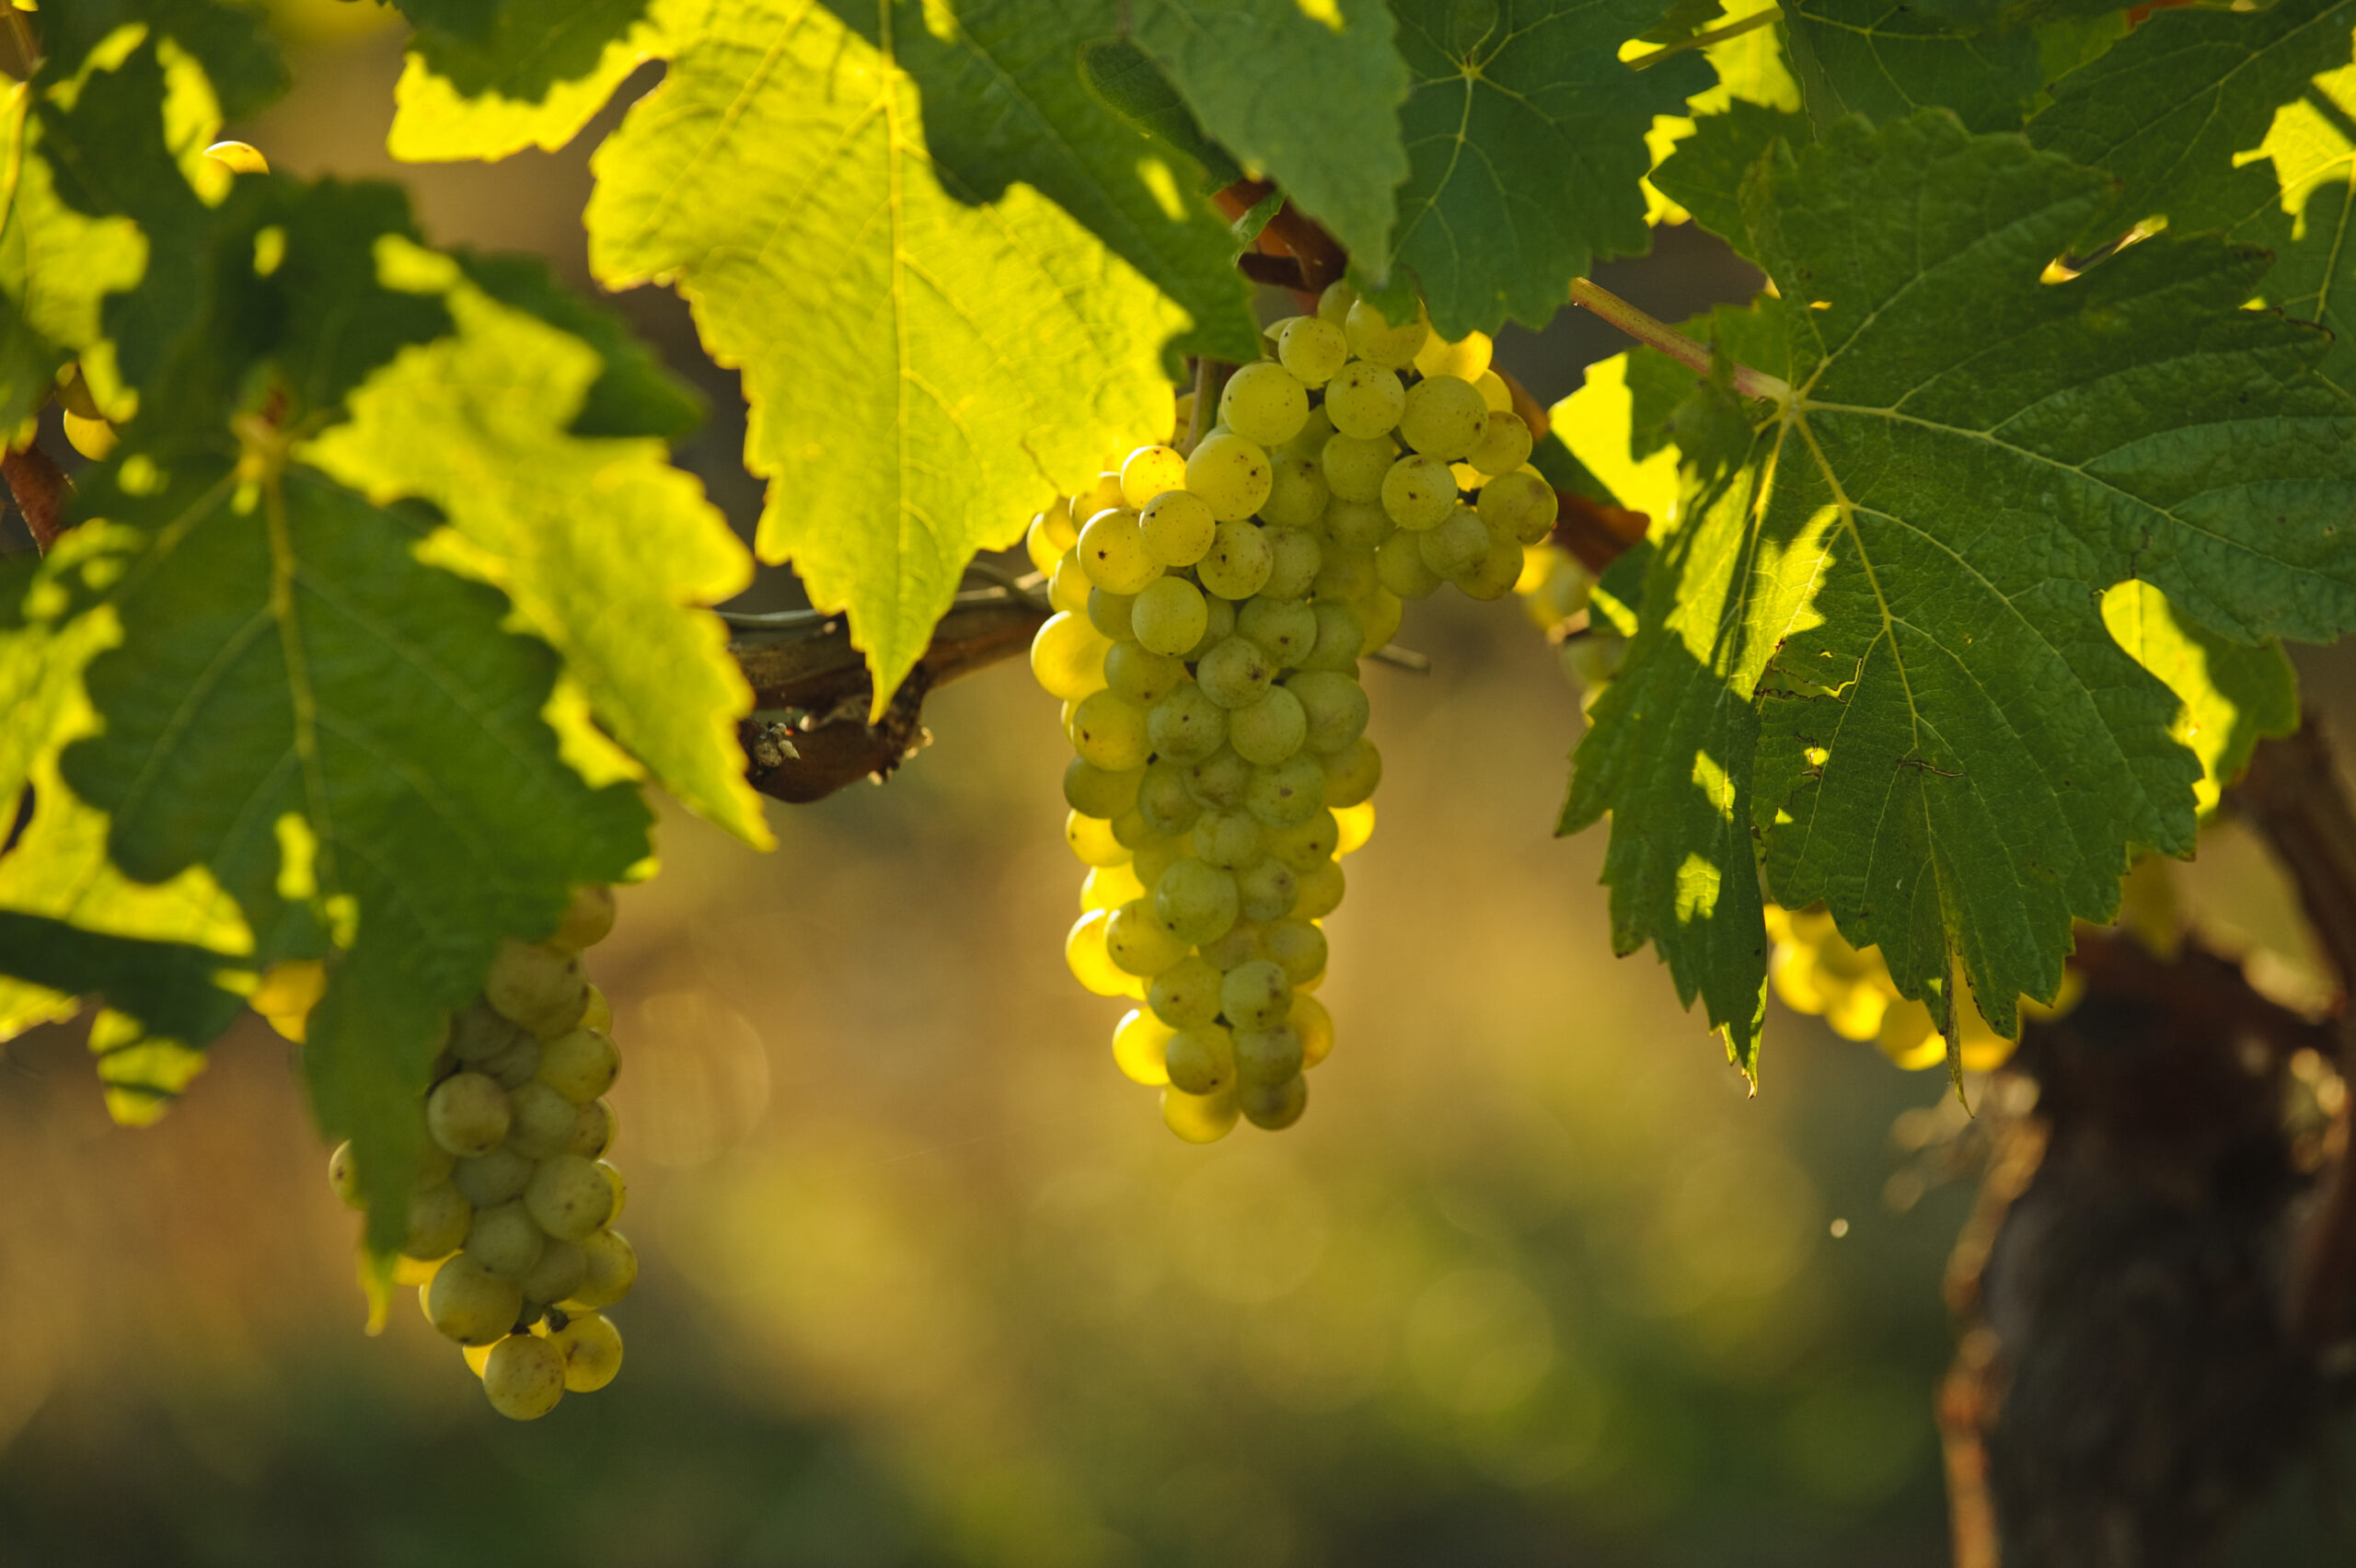 Ponzi Chardonnay grapes on the vine